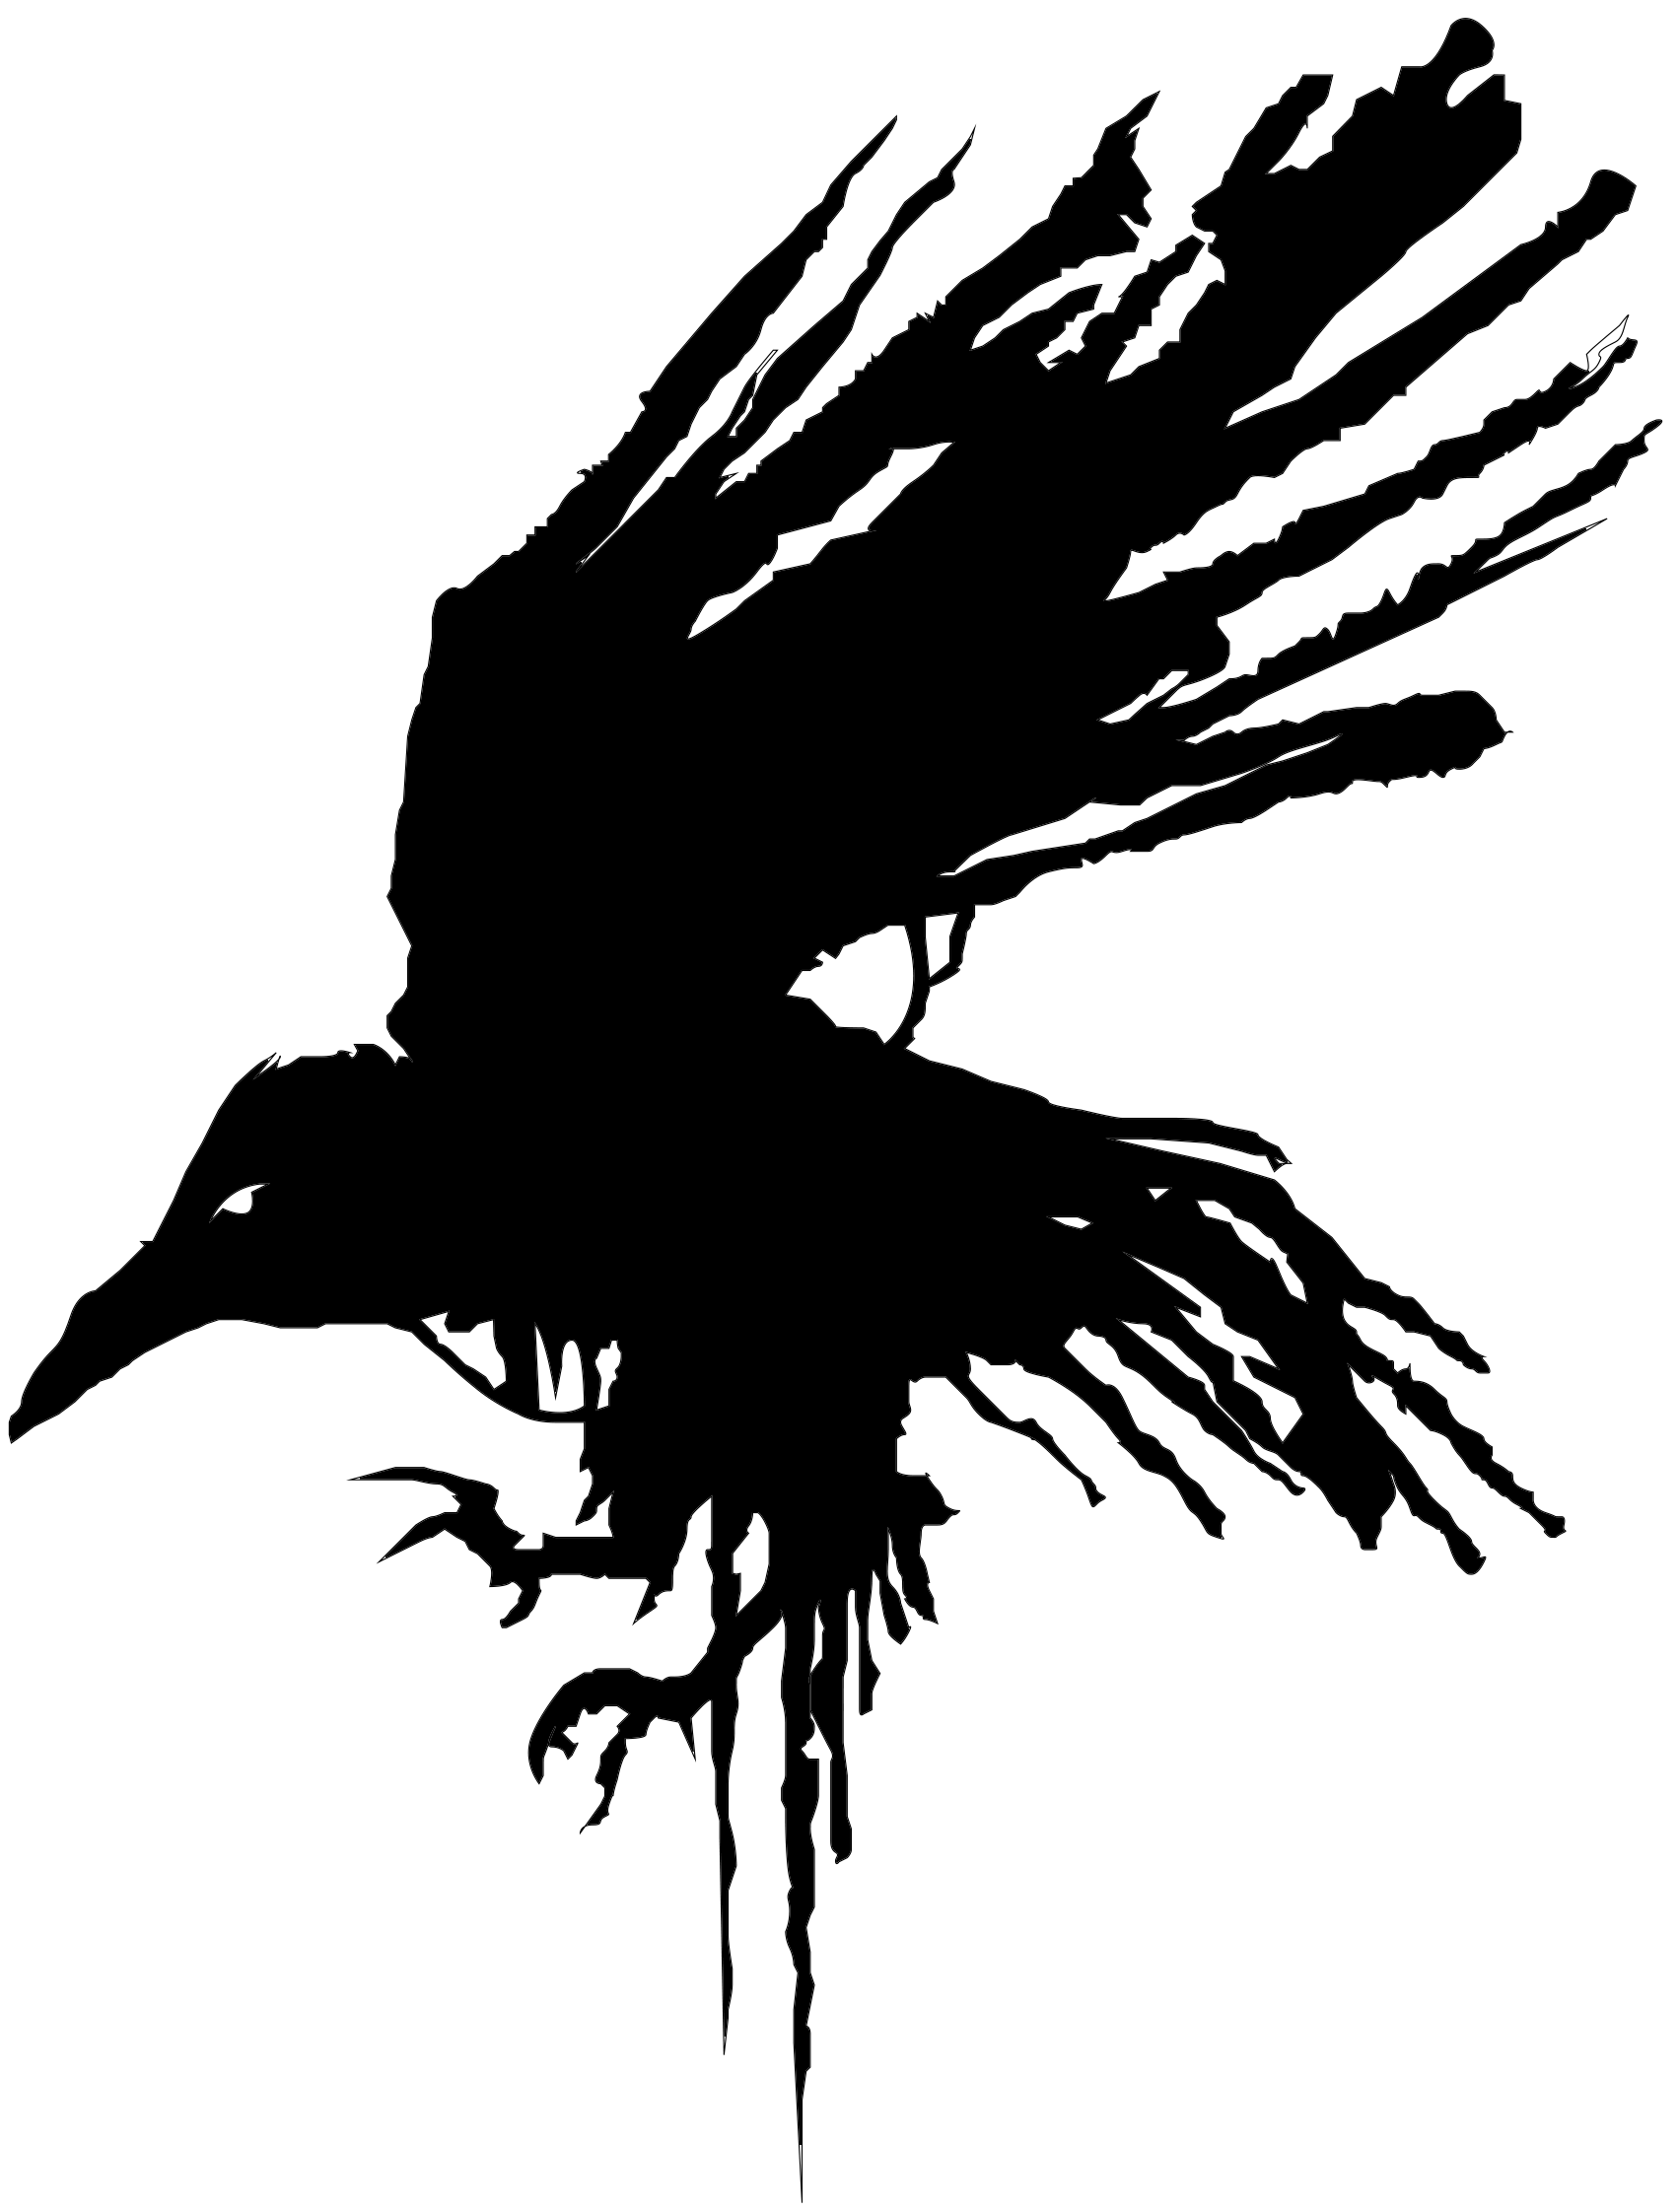 crowsnest audio logo image